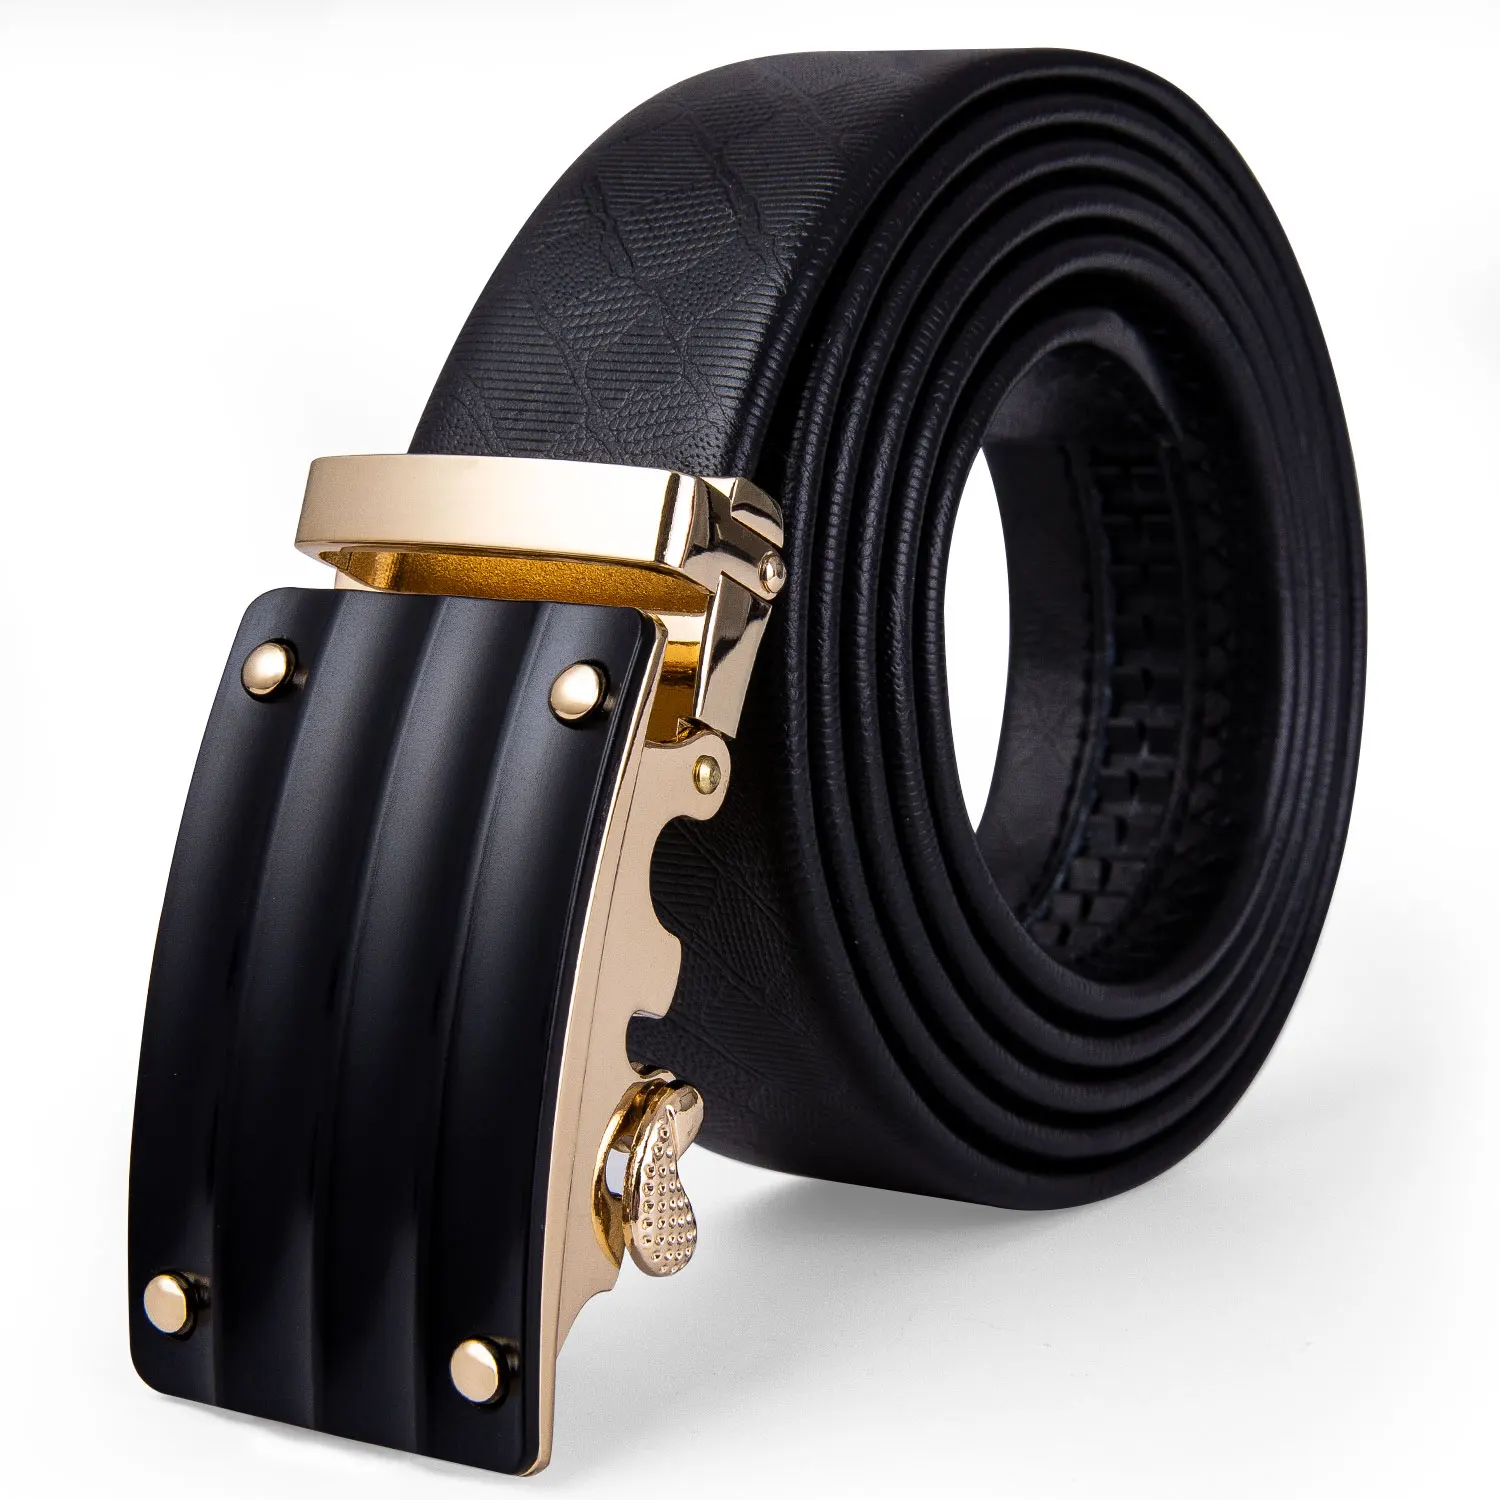 

BK-2058 Barry.Wang New Fashion Gold Black Automatic Buckle Belts 110cm-160cm Alloy buckle Belts For Men Luxery Men Leather Belts